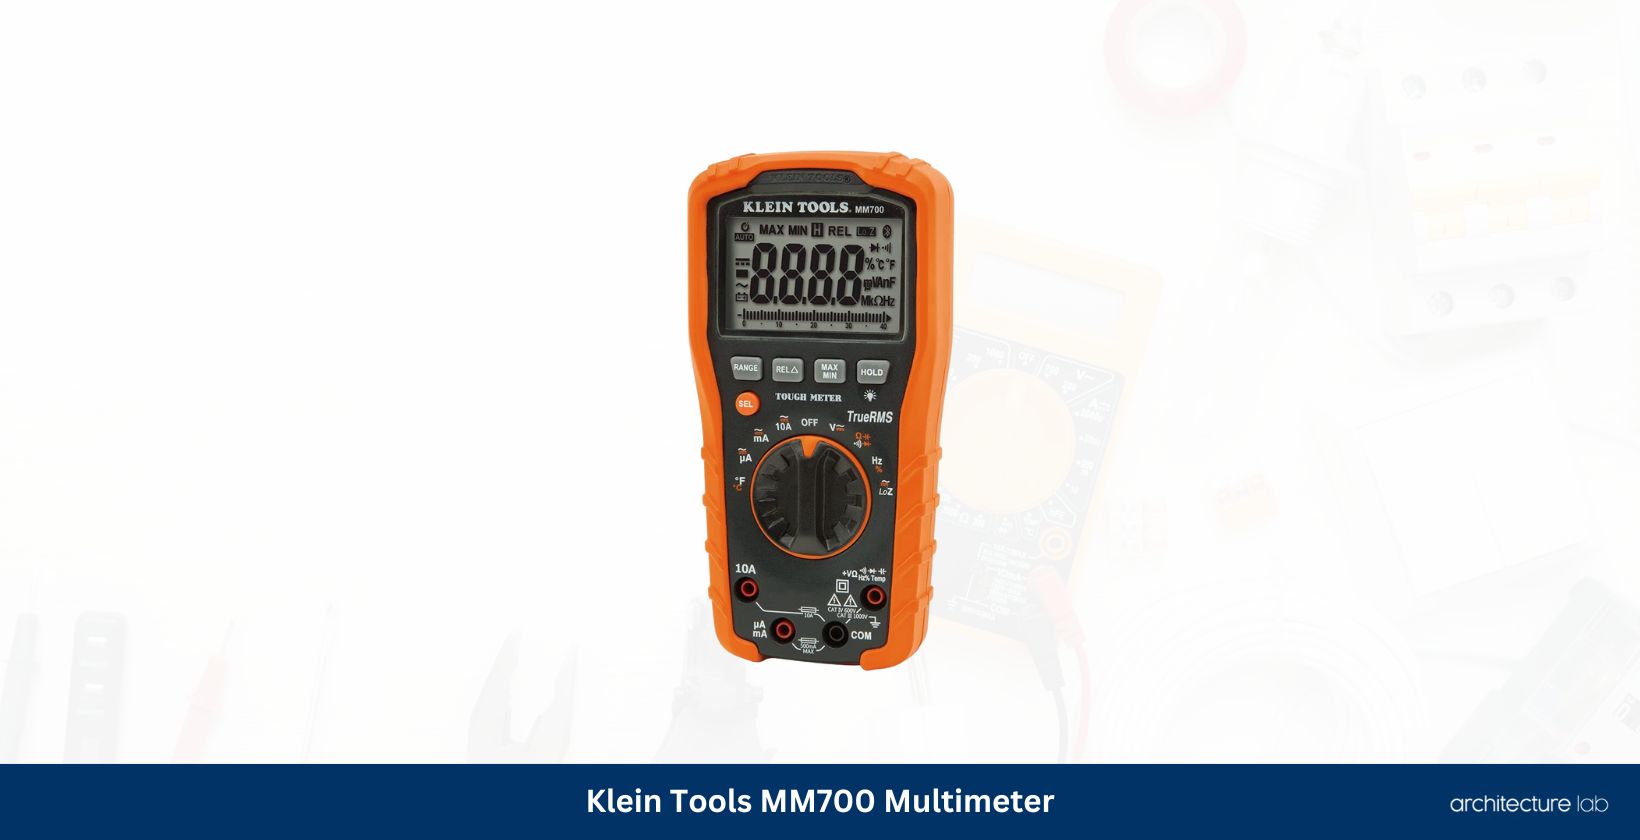 Klein tools mm700 multimeter